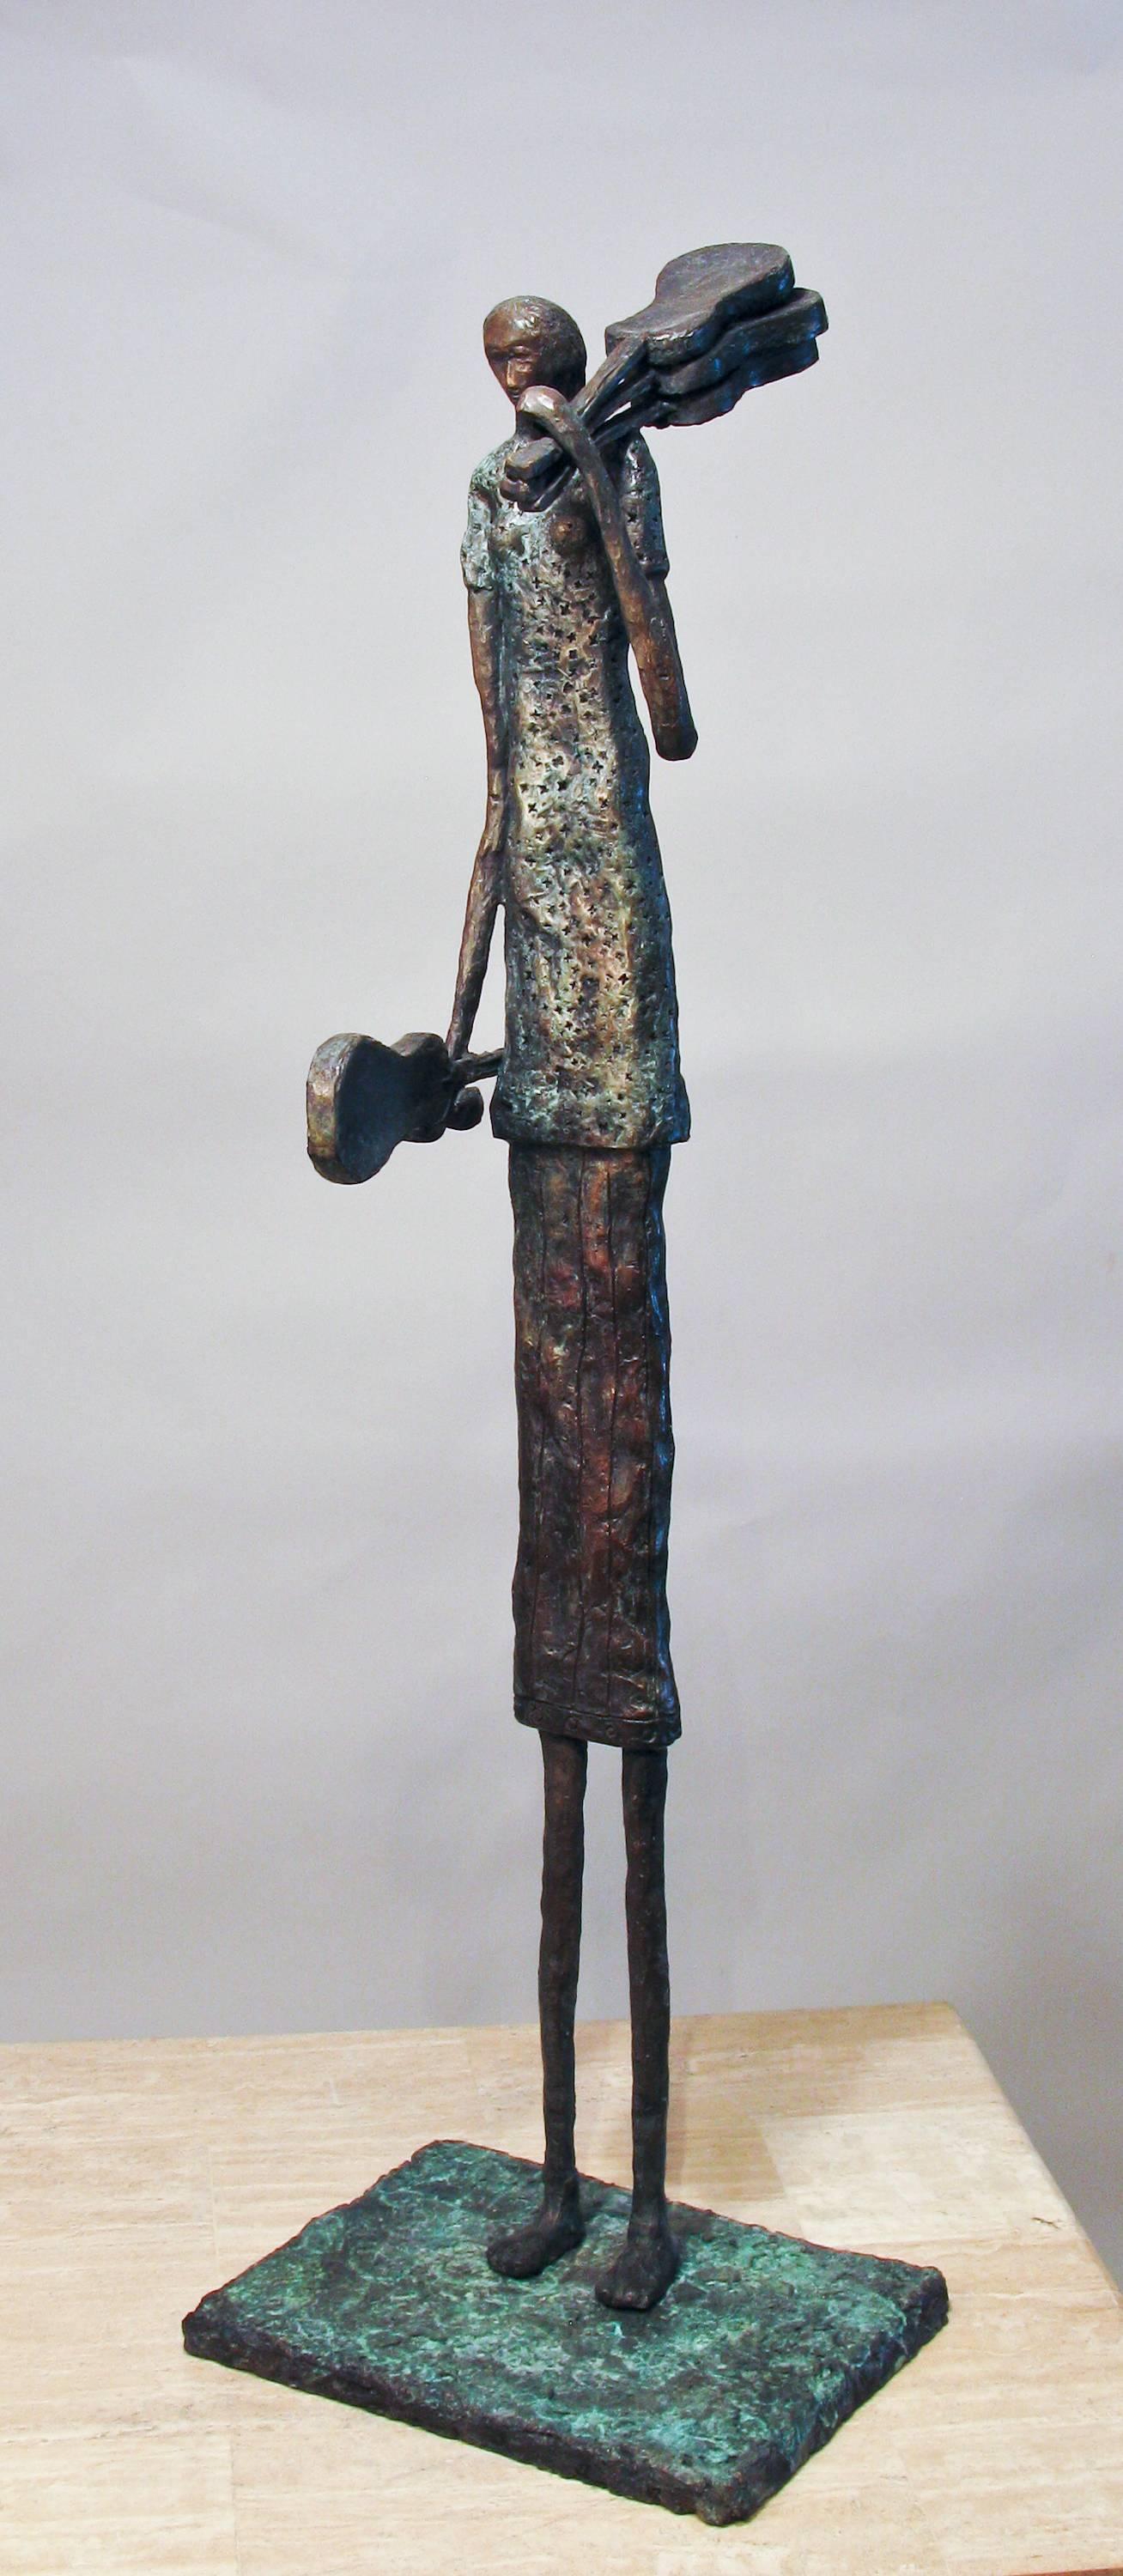 Figurative Sculpture Eduardo Oropeza - Guitarras, sculpture en bronze, verticale, vendeur de guitares, rustique, bronze texturé